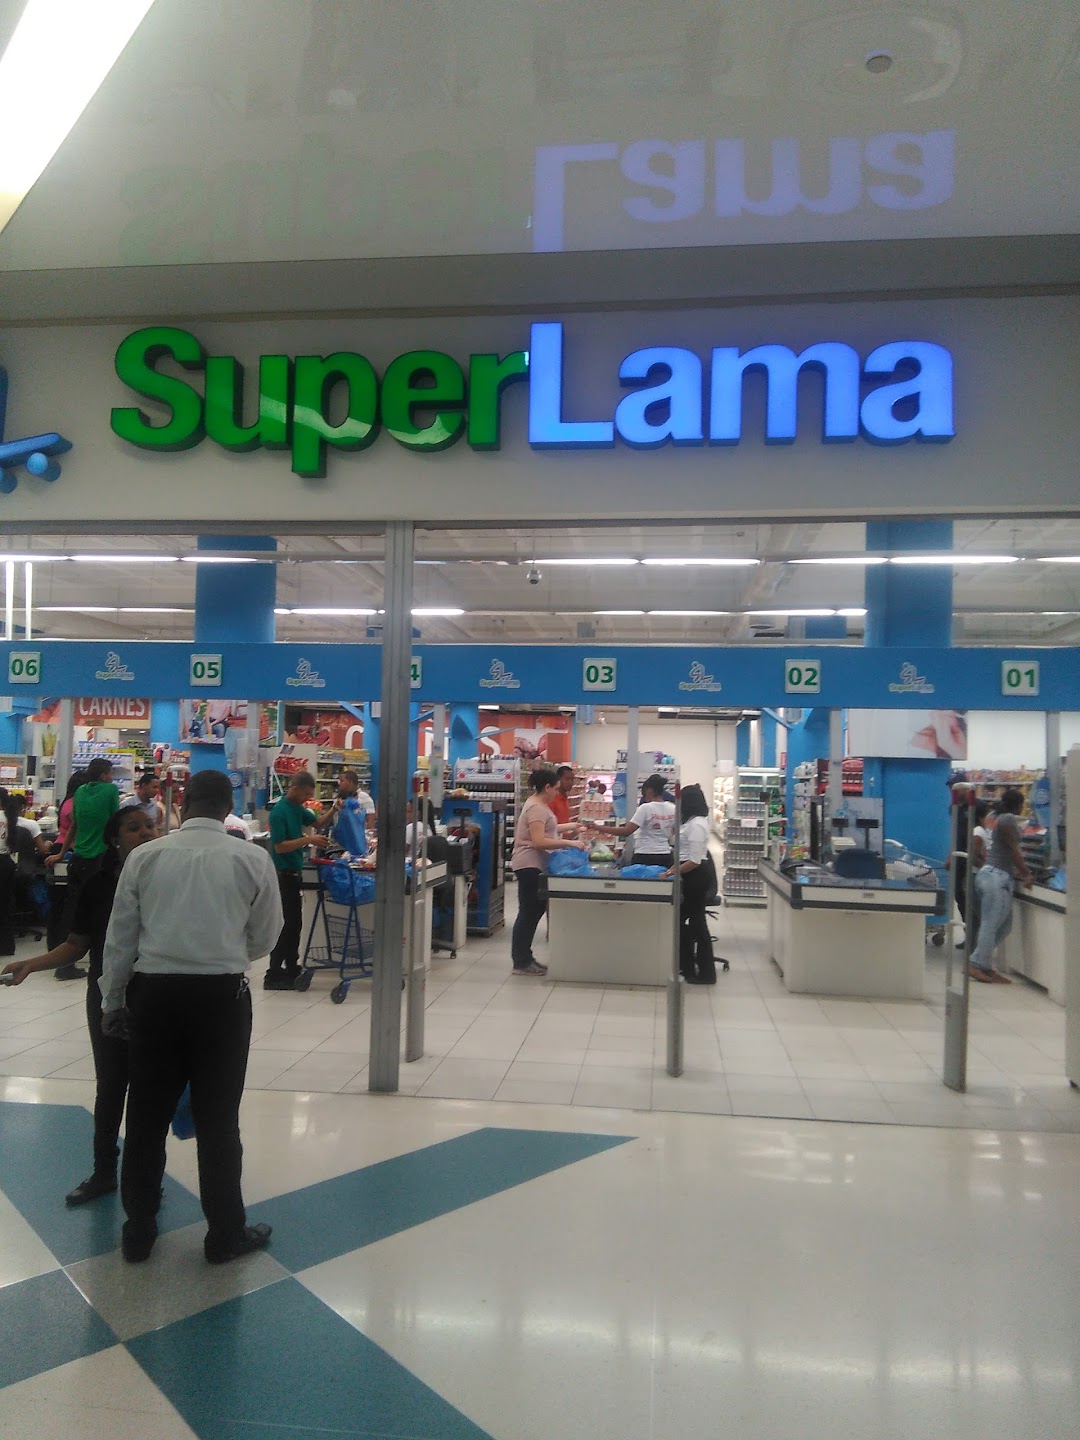 Super lama by Supermercado Plaza Lama